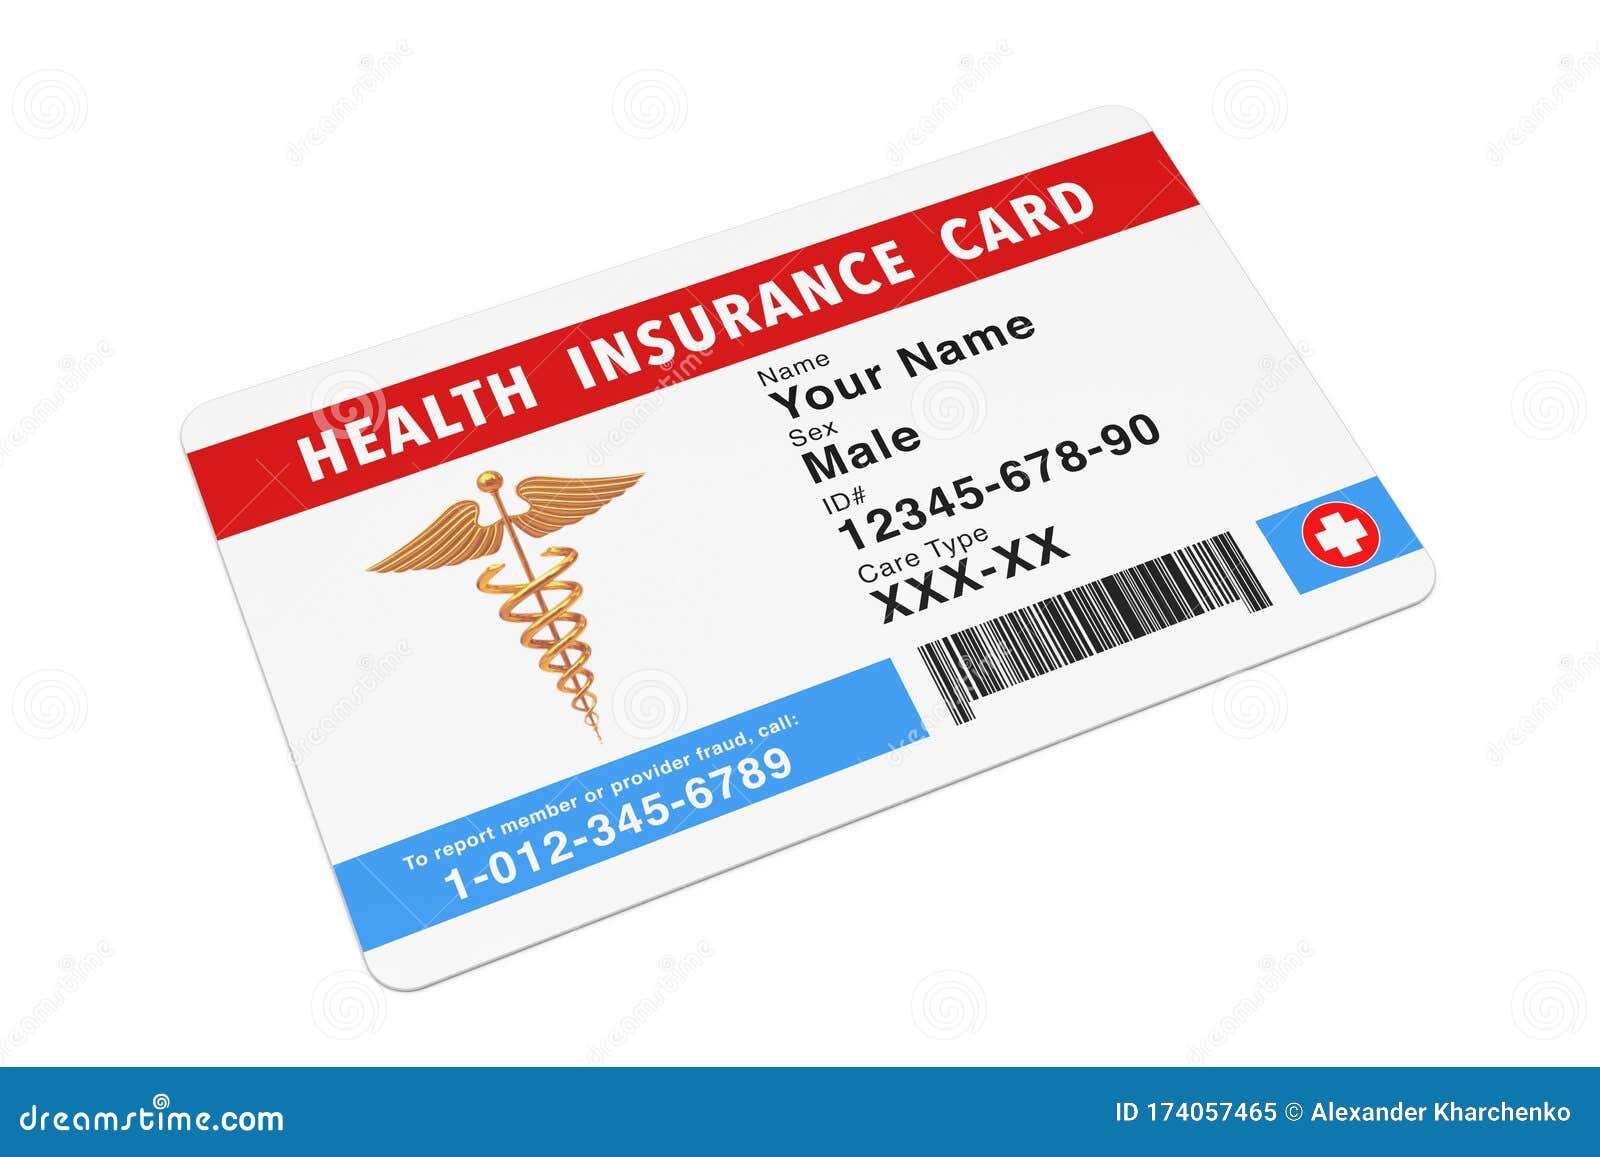 Medical Card Insurans : Medical Card Takaful Life Insurance A2a Aia